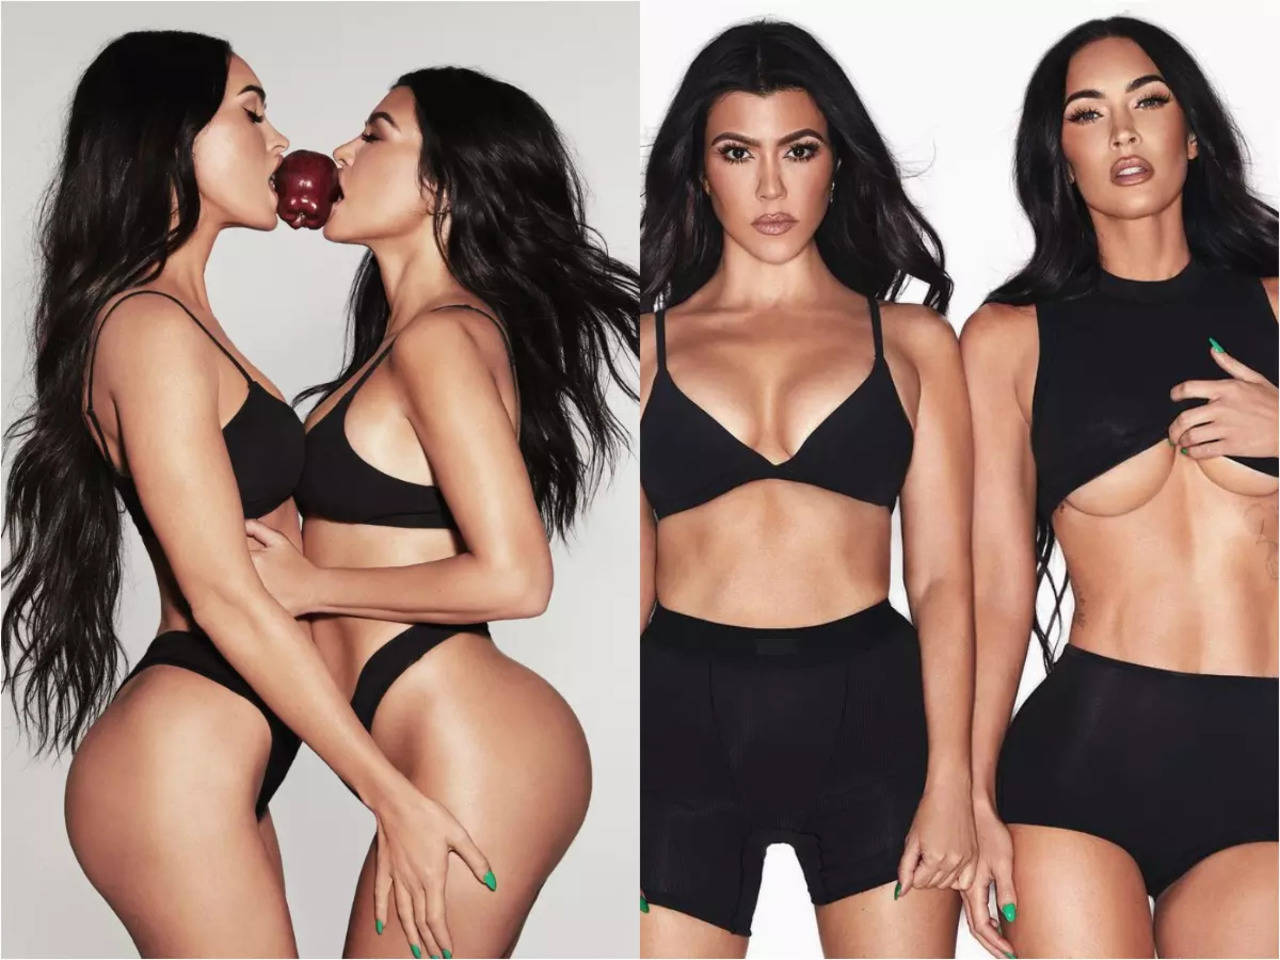 Megan Fox and Kourtney Kardashian strip in a provocative campaign for Kim Kardashian photo pic